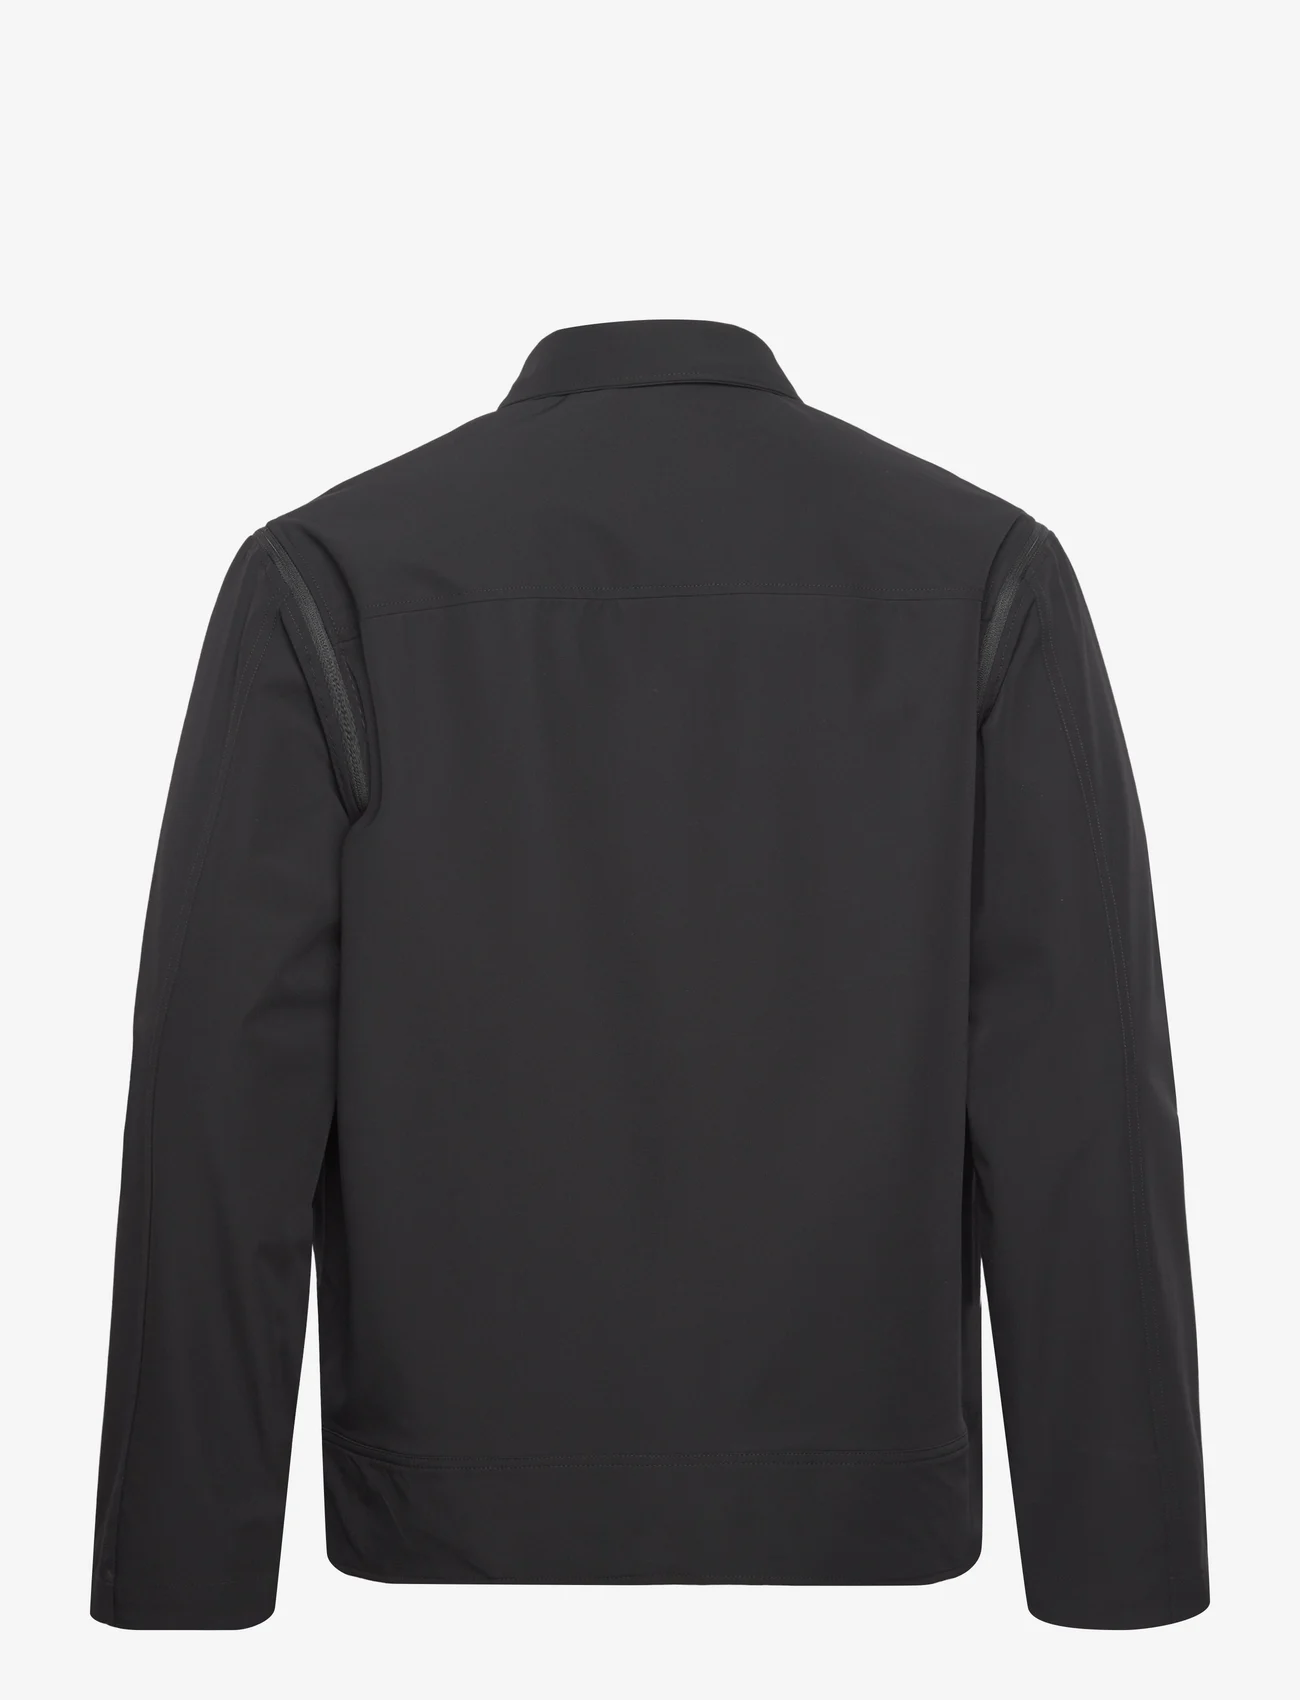 Wood Wood - Lennon Zip Shirt - spring jackets - black - 1